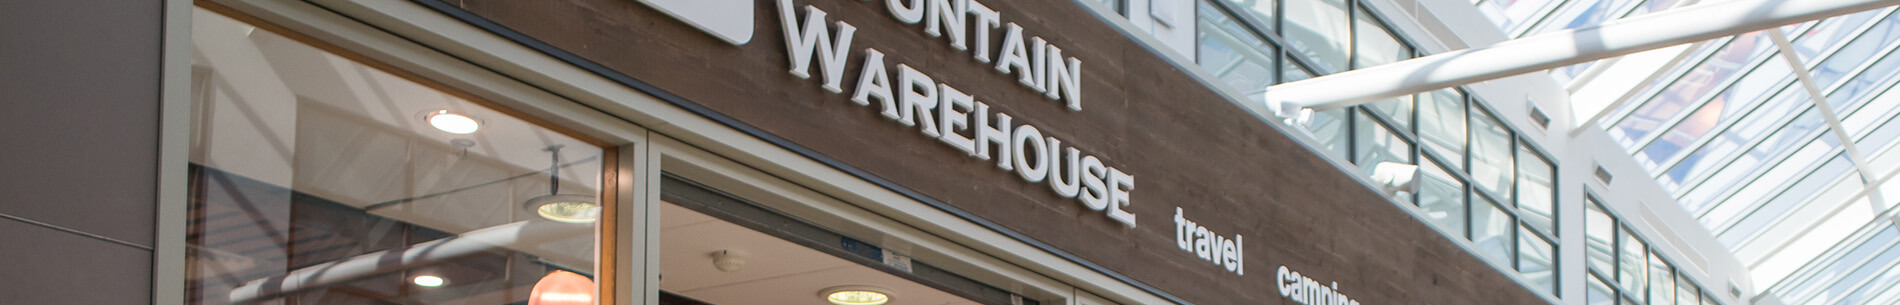 mountain warehouse banner